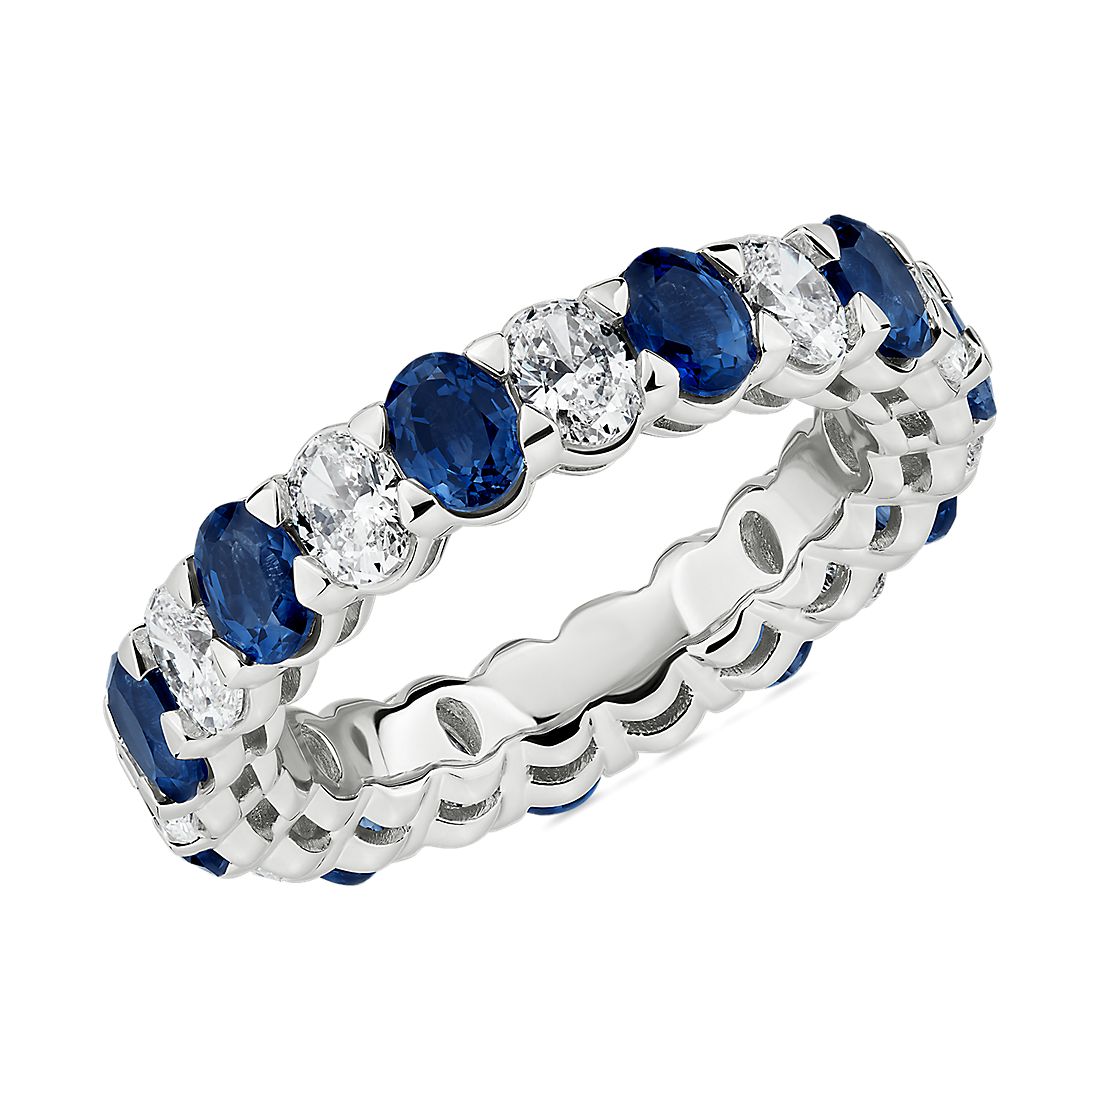 Blue Nile Studio Seamless Alternating Oval Cut Diamond and Sapphire Eternity Ring in Platinum- G/VS2 (1 1/2 ct. tw.)